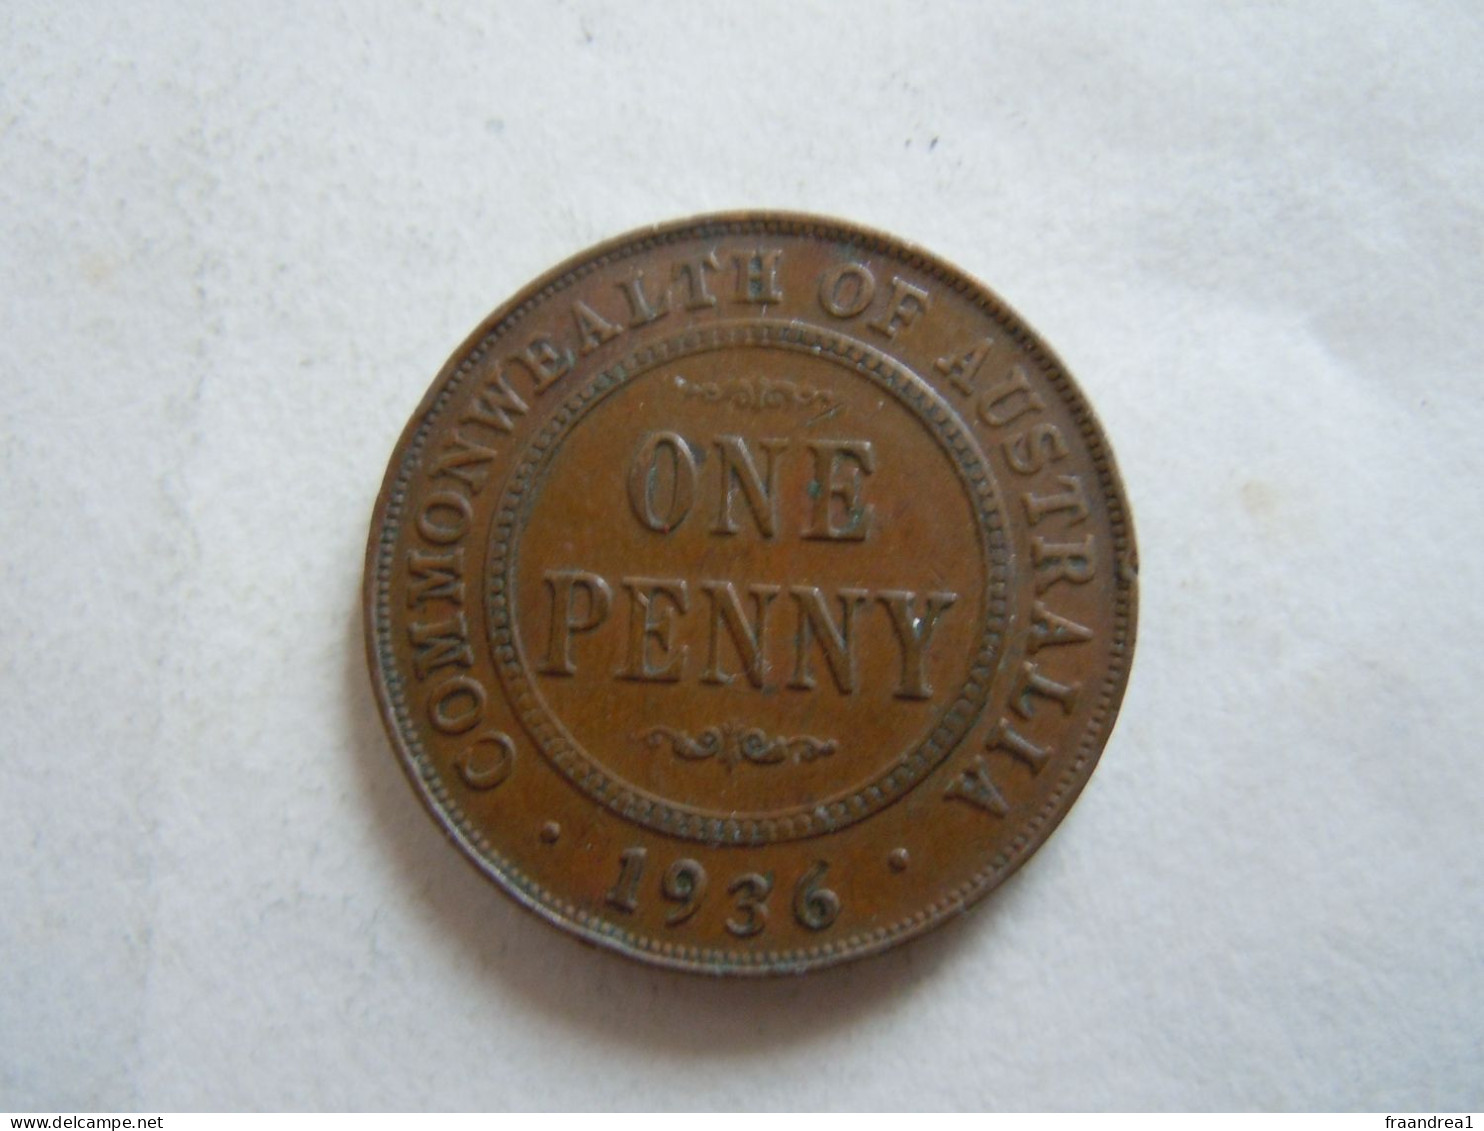 1936 AUSTRALIA ONE PENNY - Penny